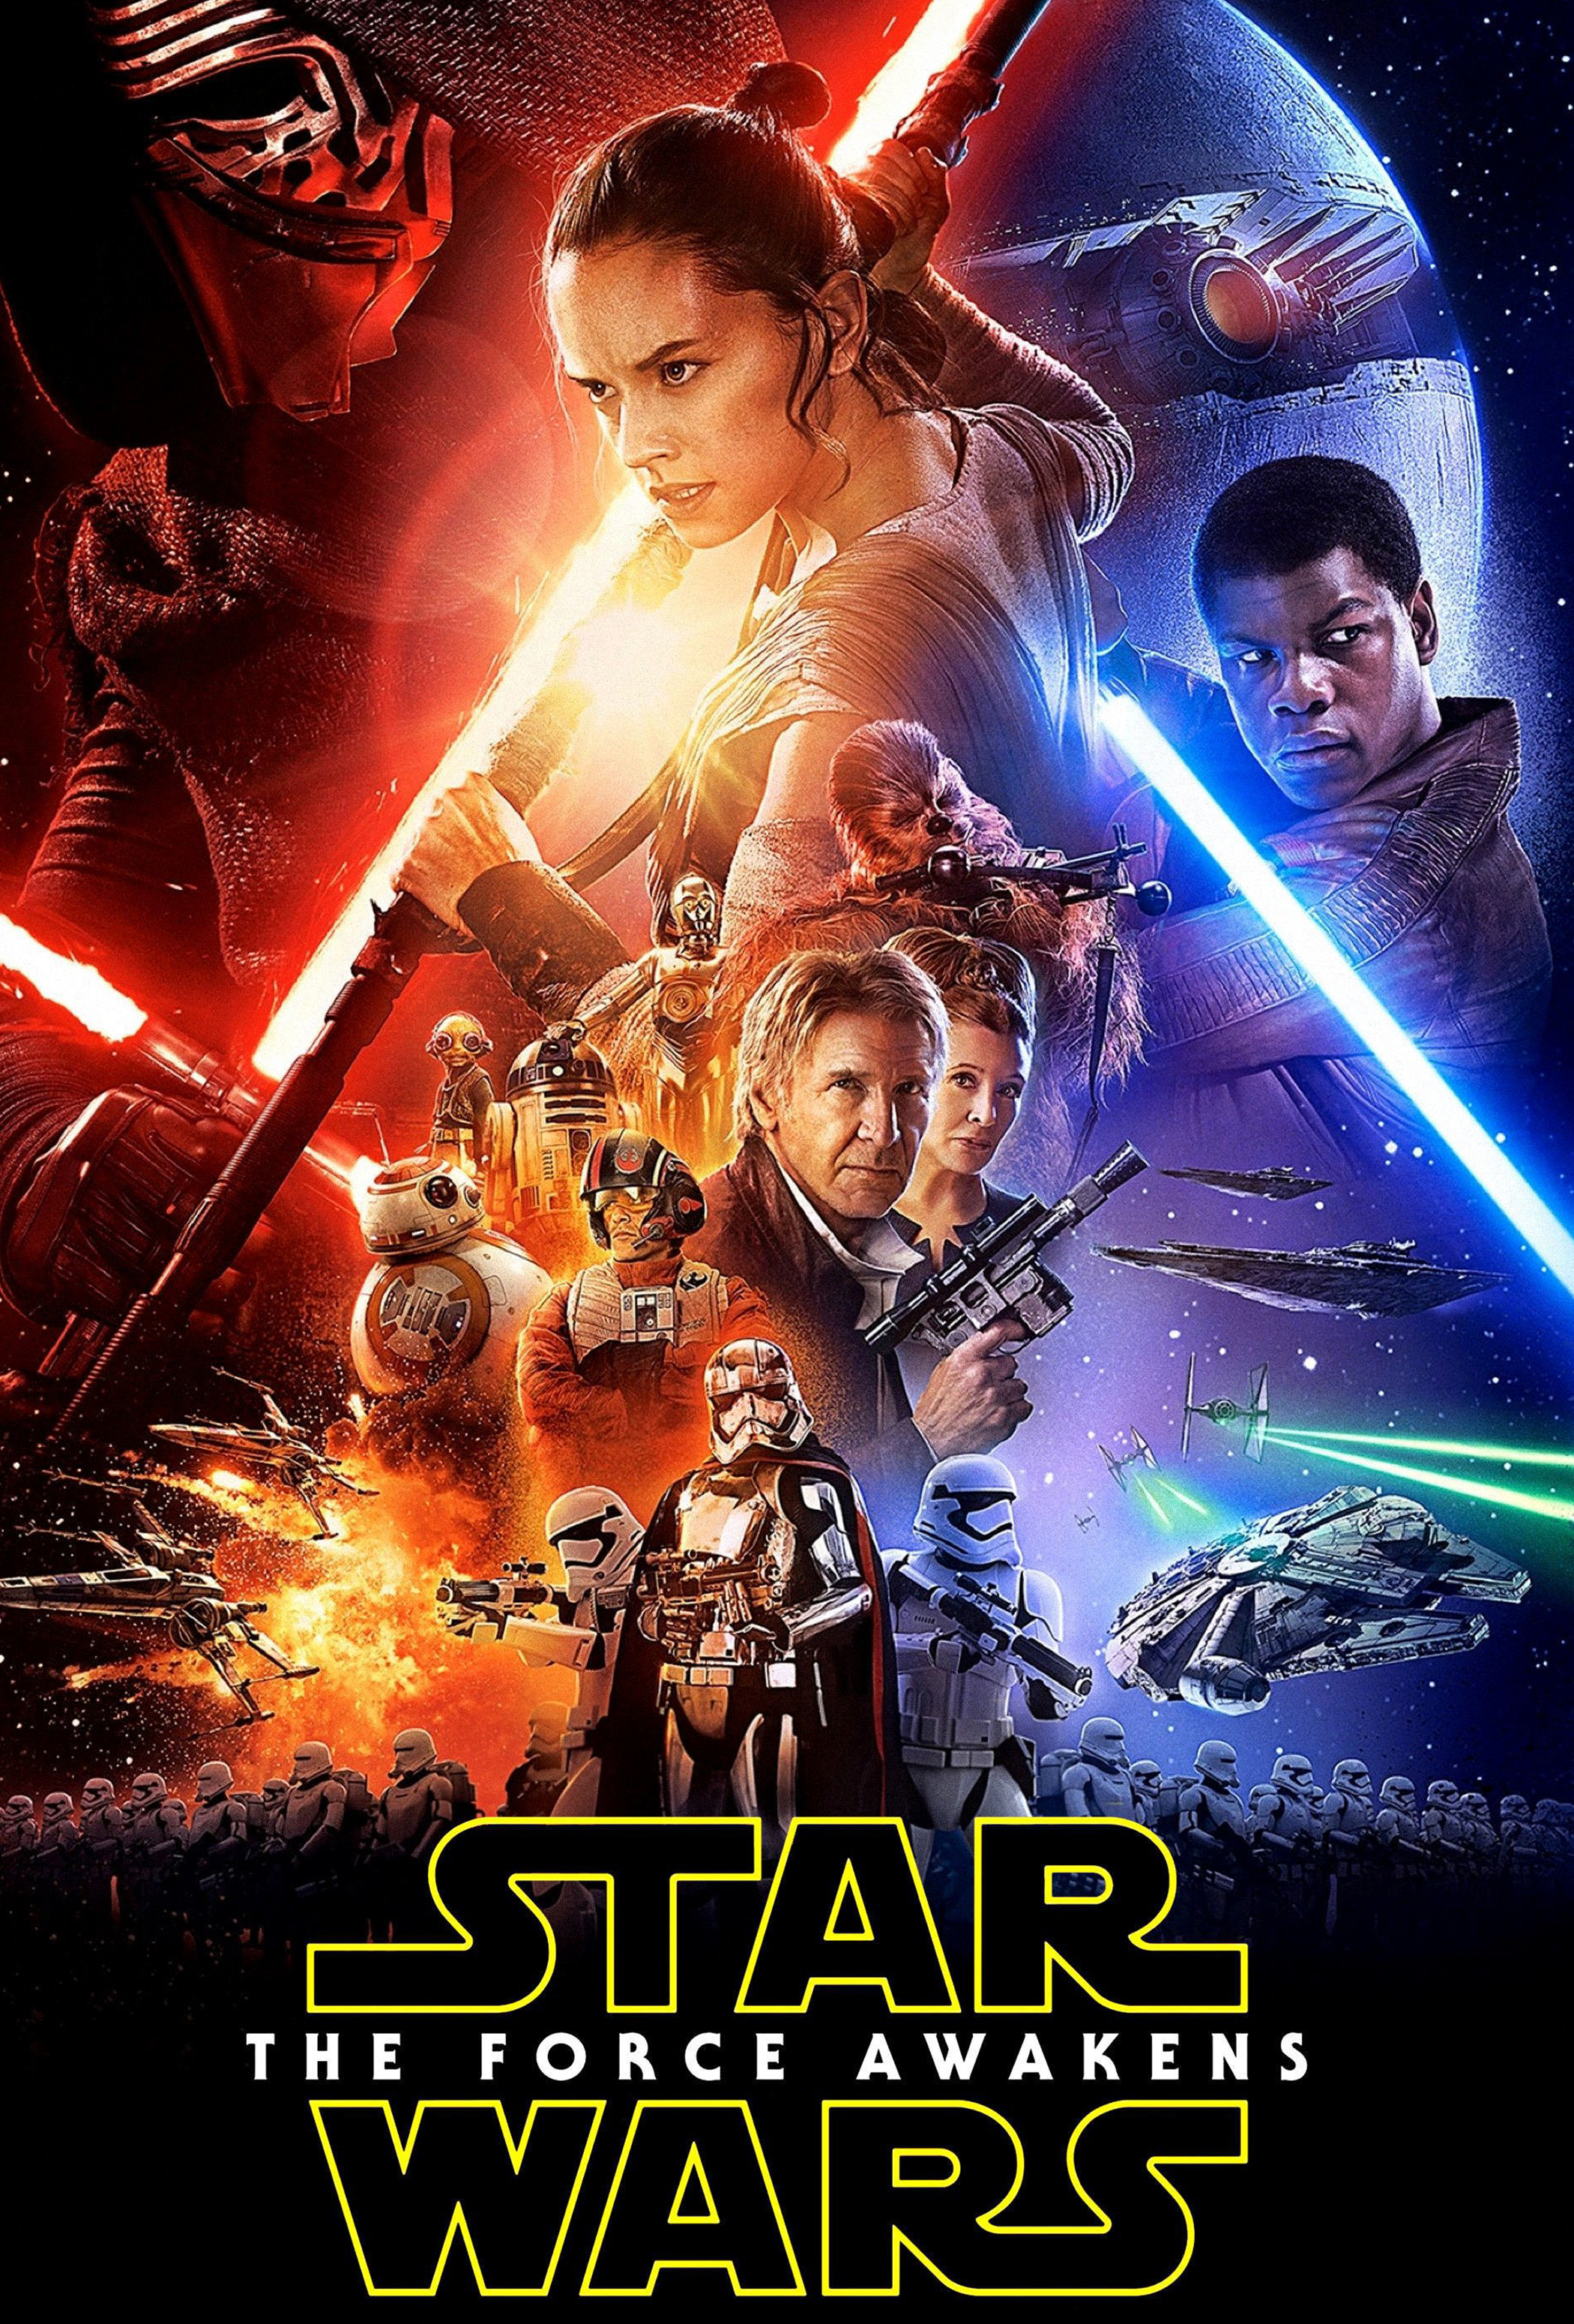 star wars episode 7 the force awakens full movie